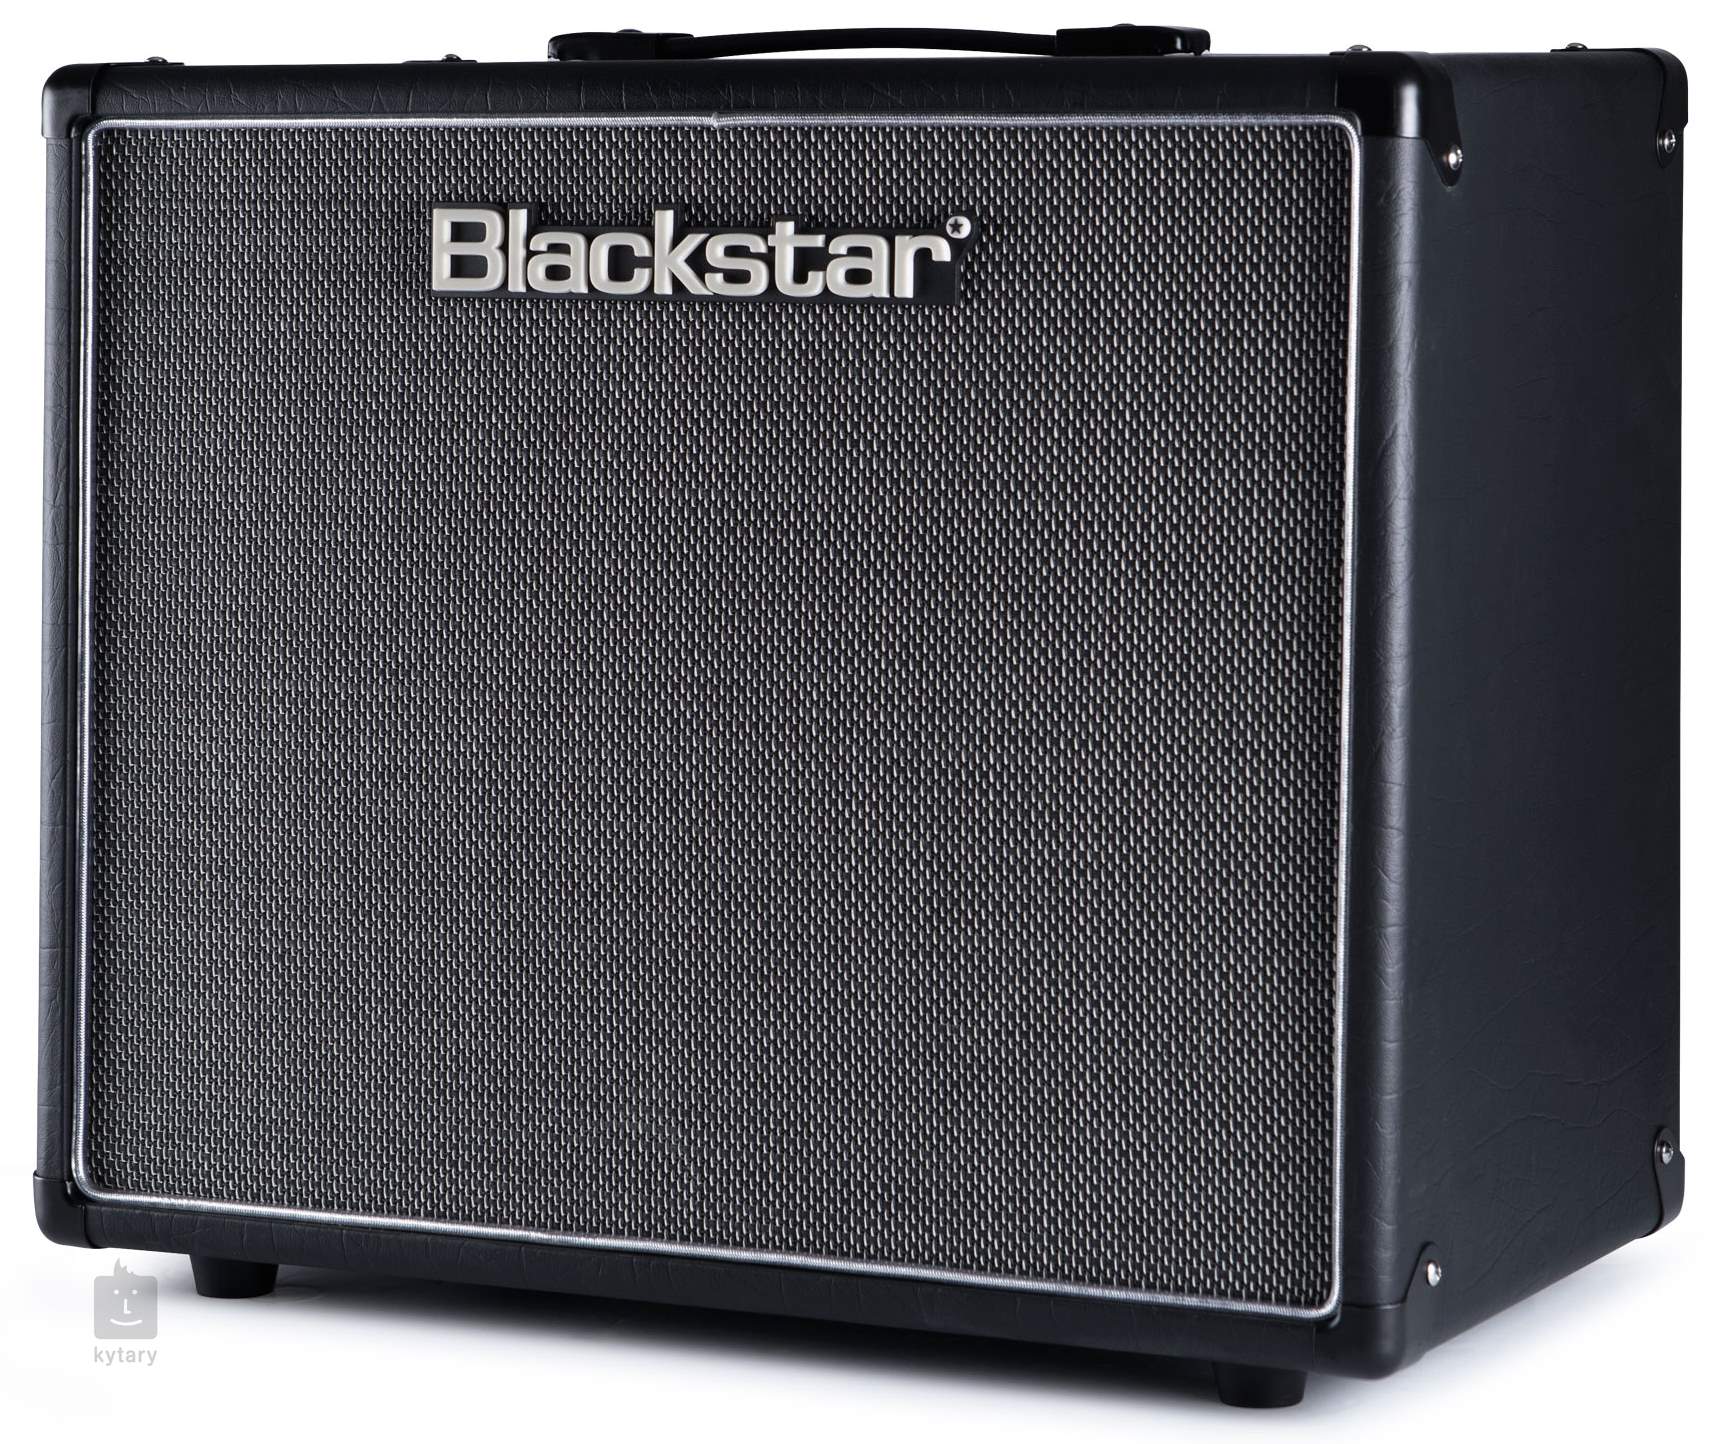 BLACKSTAR HT-112OC MkII Guitar Cabinet | Kytary.ie